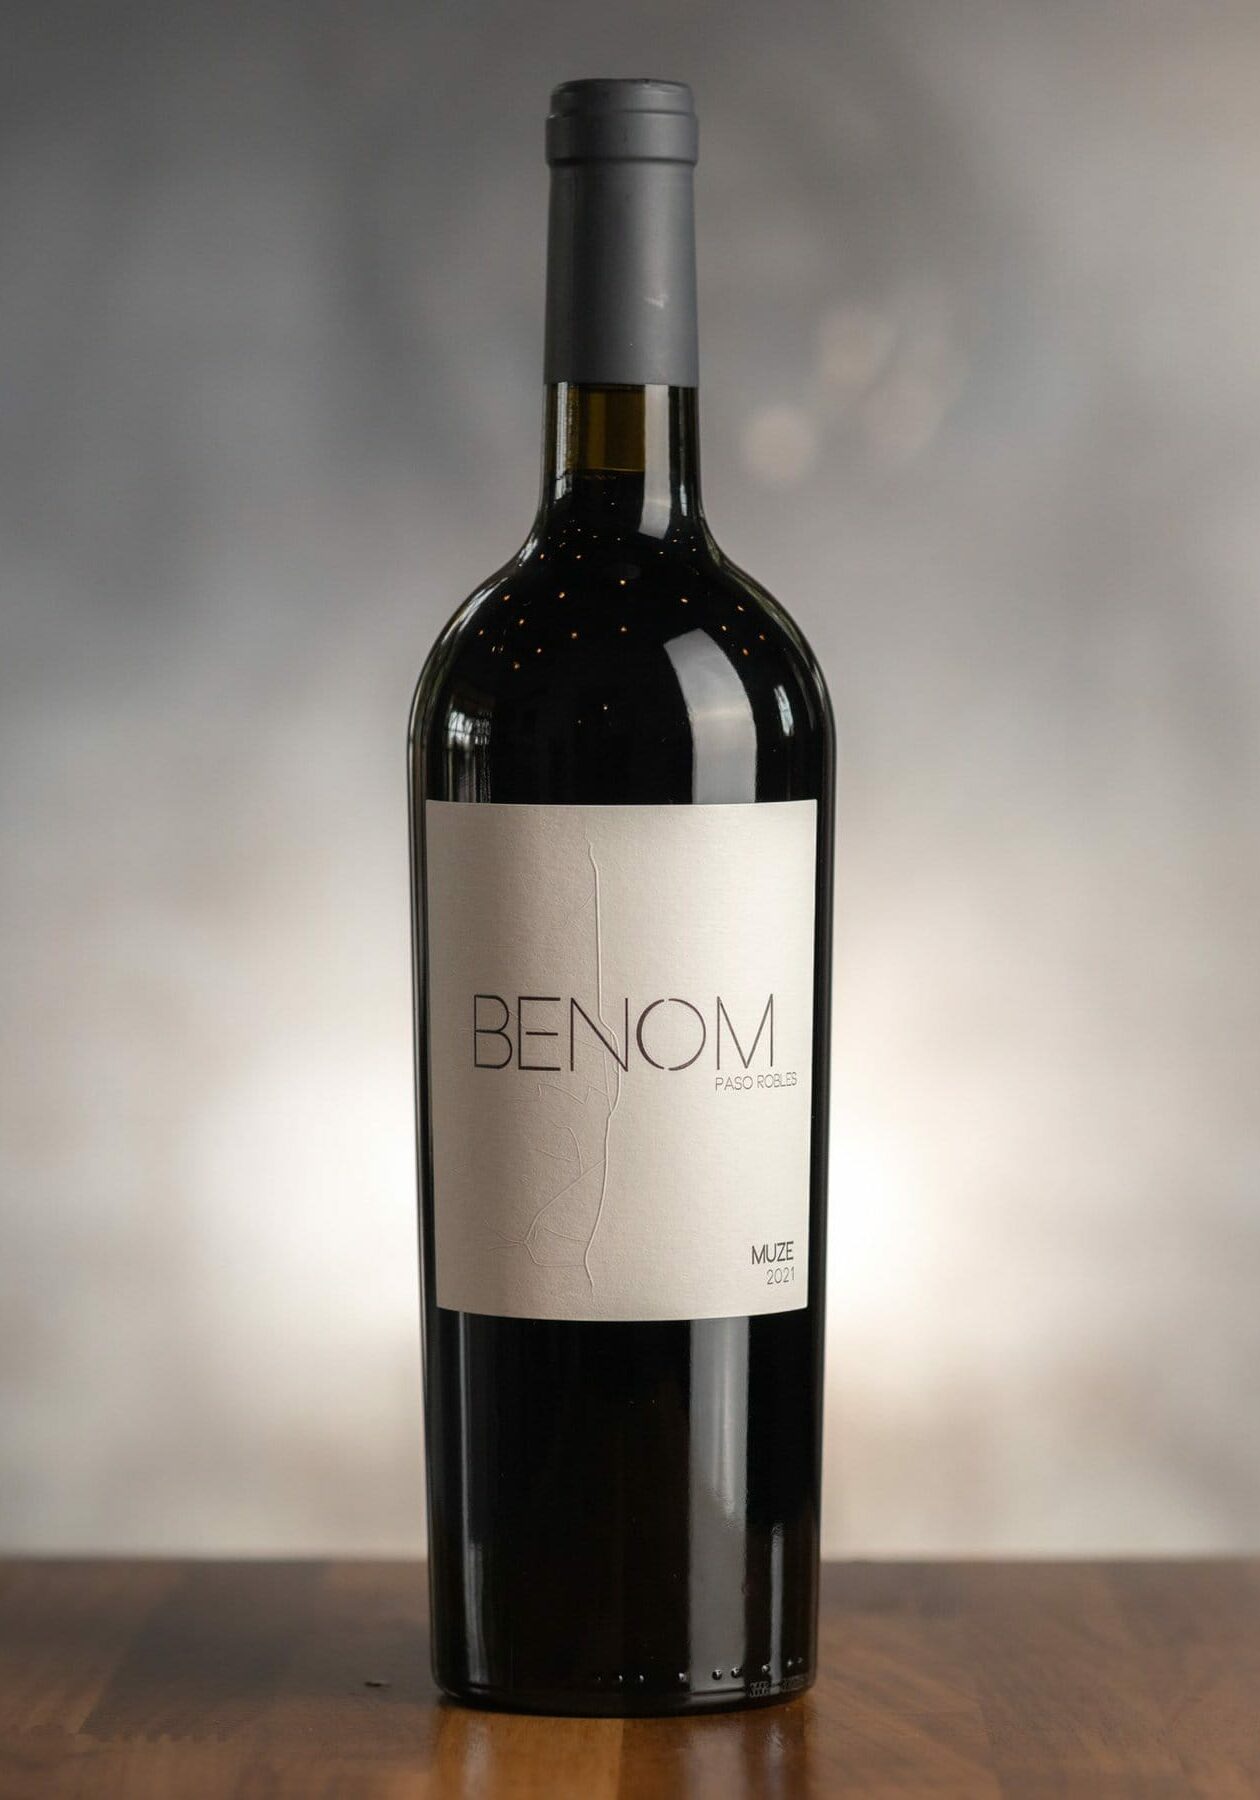 A bottle of BENOM Muze wine - Paso Robles Mourvedre, Cabernet Sauvignon, Syrah